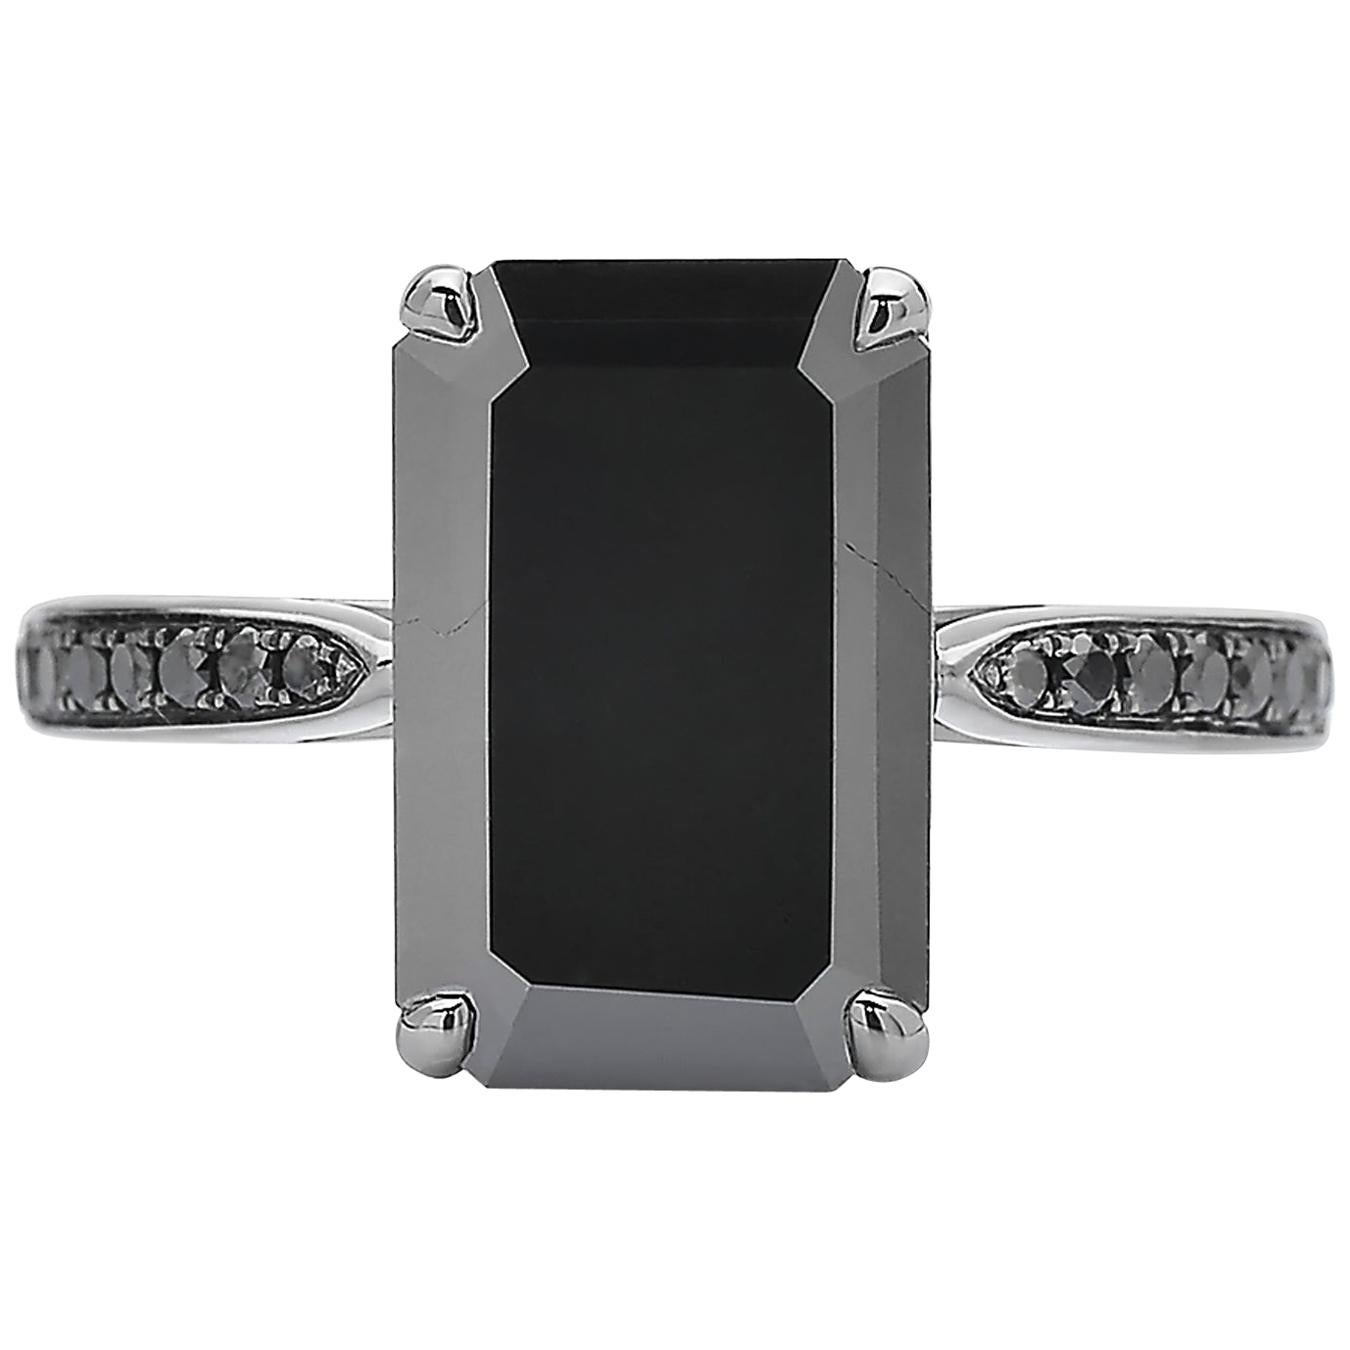 4.15 Carat Black Diamond Ring in 18 Karat White Gold with Black Rhodium Finish For Sale